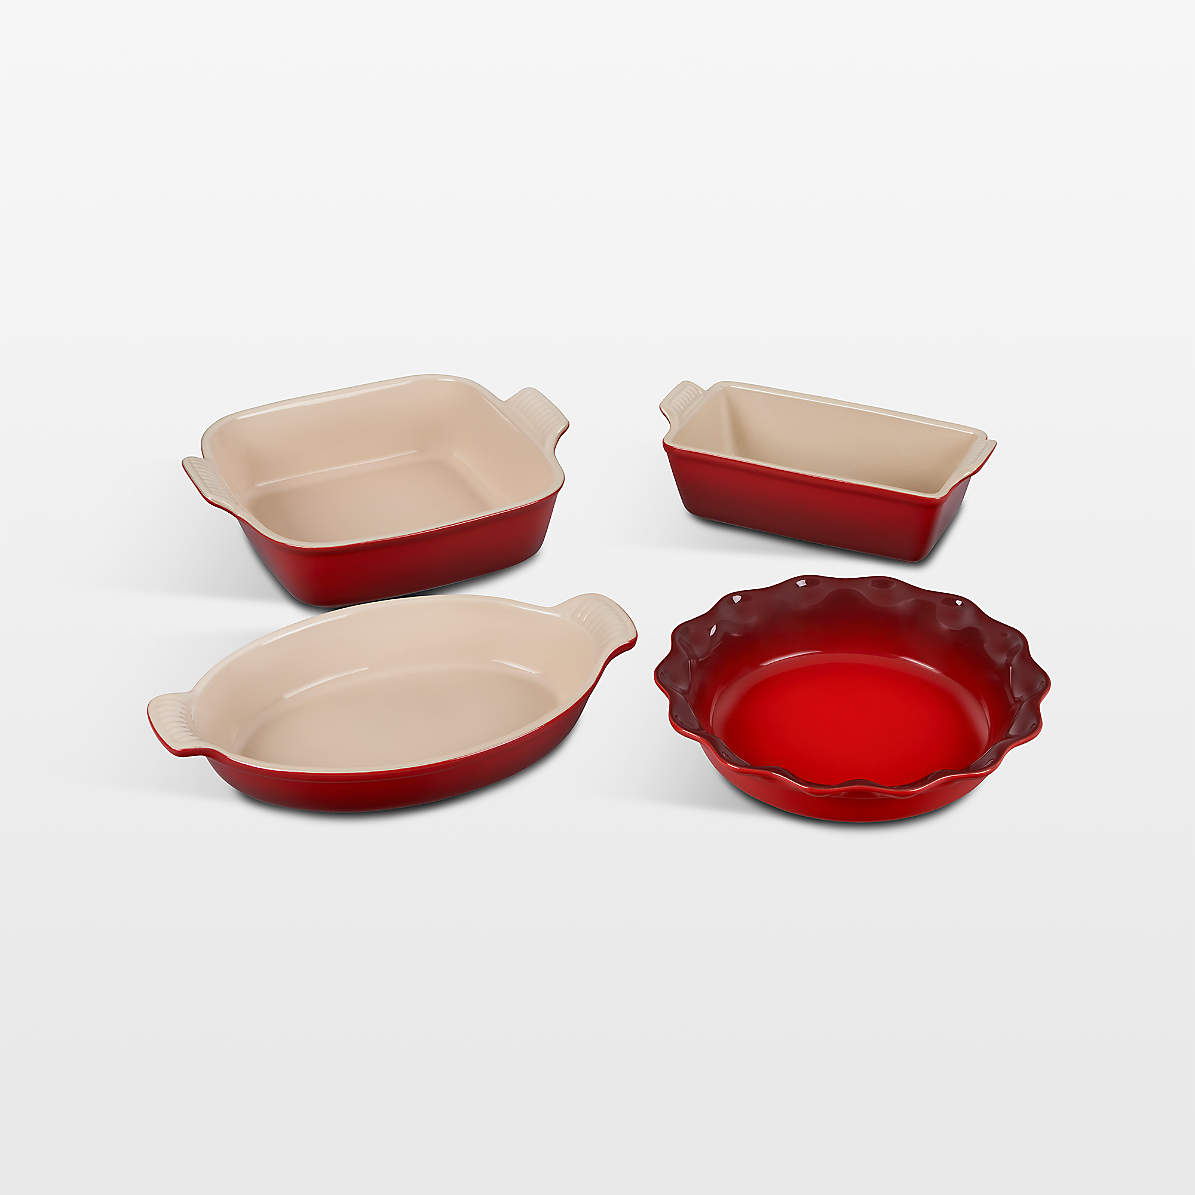 Superior Glass Casserole Dish Set - 4-Piece Rectangular Bakeware